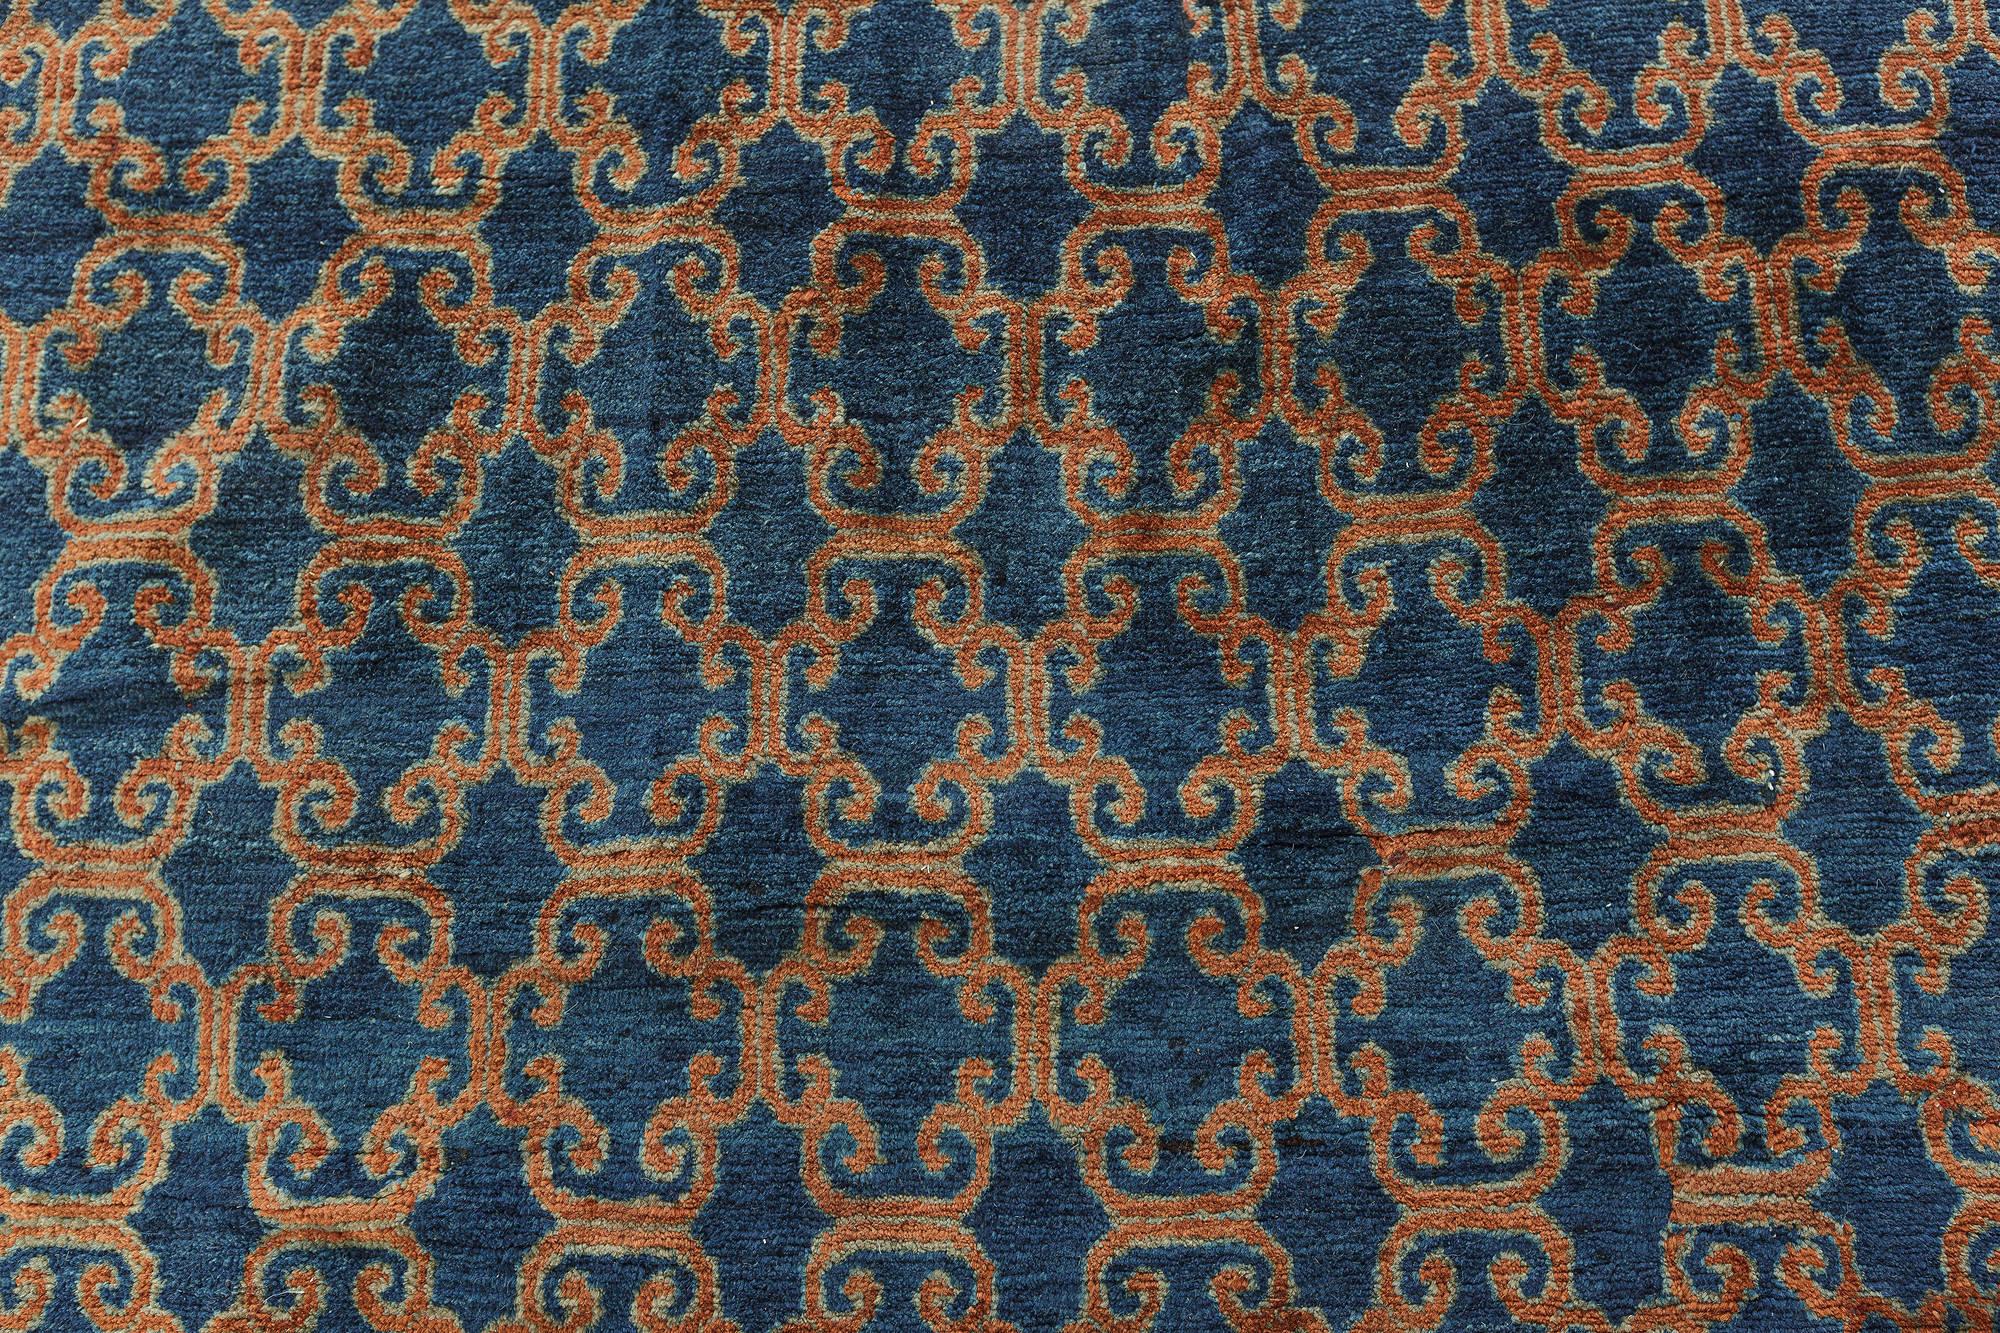 One-of-a-kind Large vintage Samarkand geometric 'Size Adjusted' rug
Size: 14'0